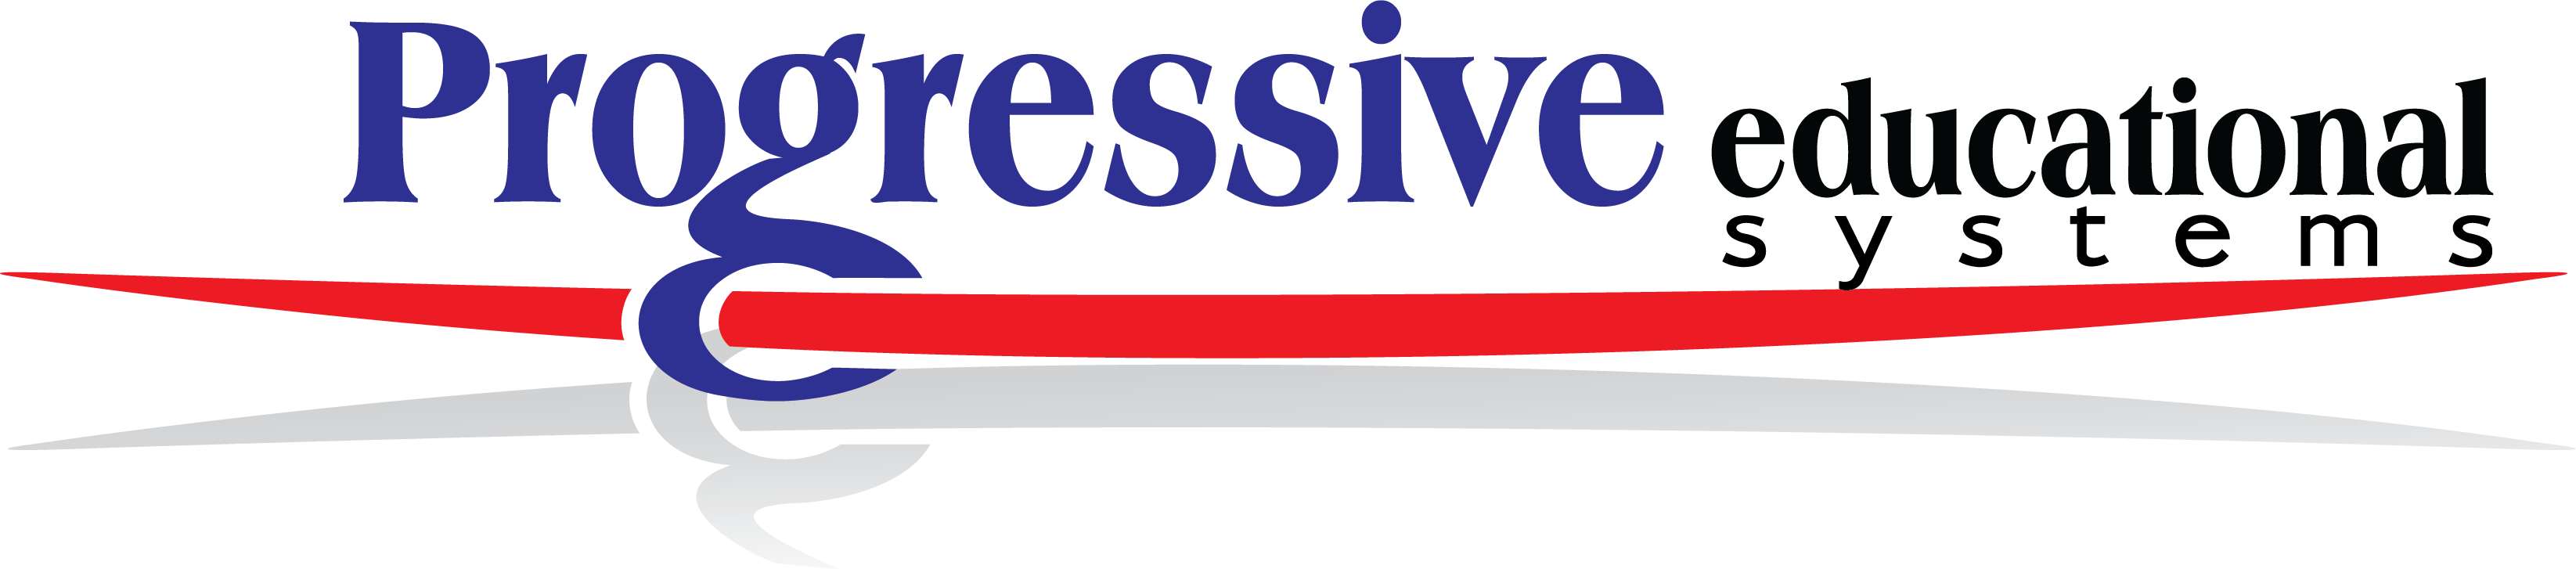 Progressive Educational Systems logo